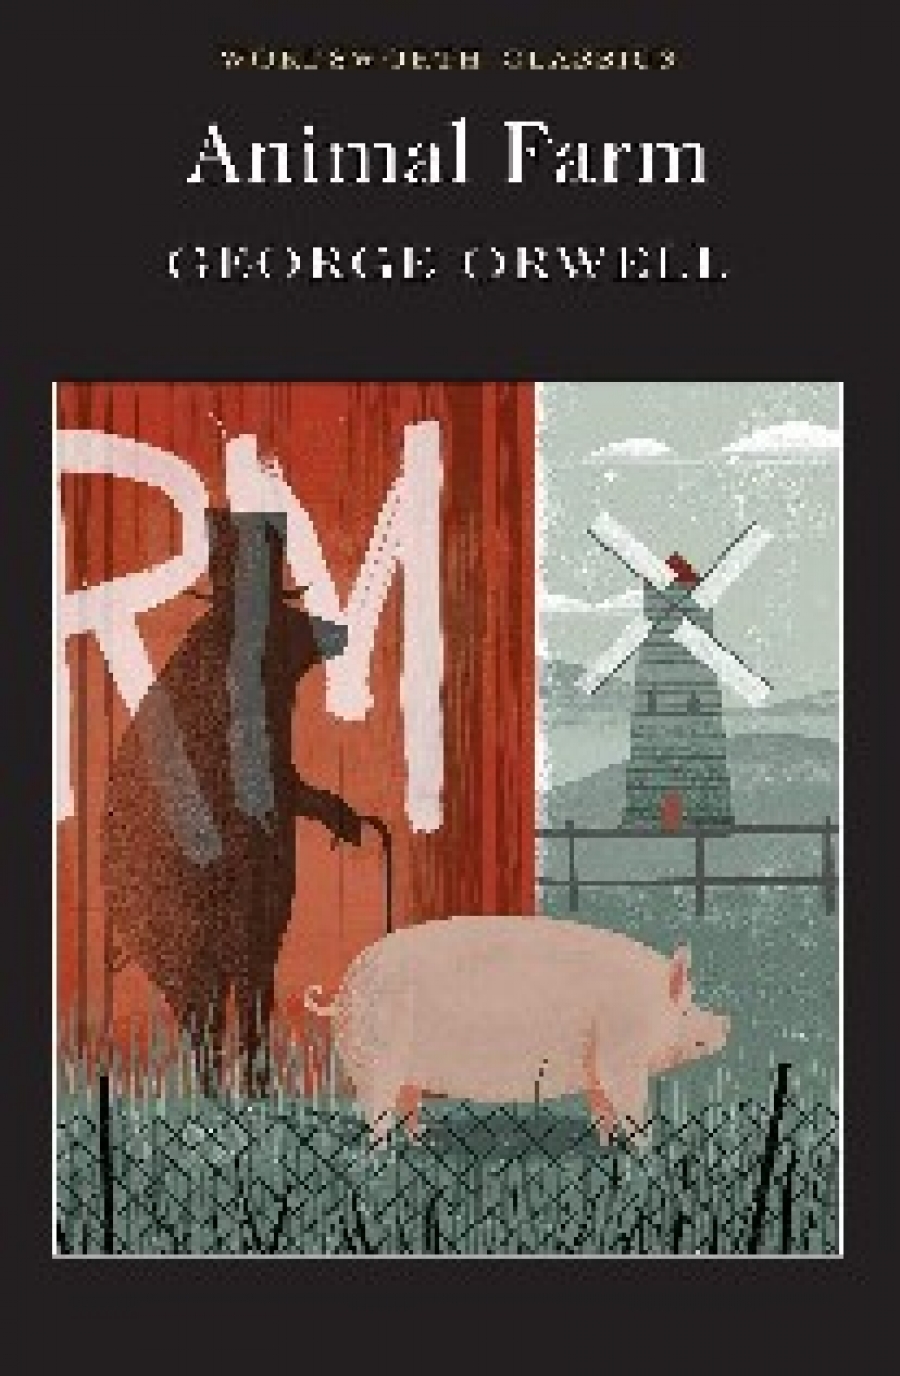 George Orwell Animal Farm 